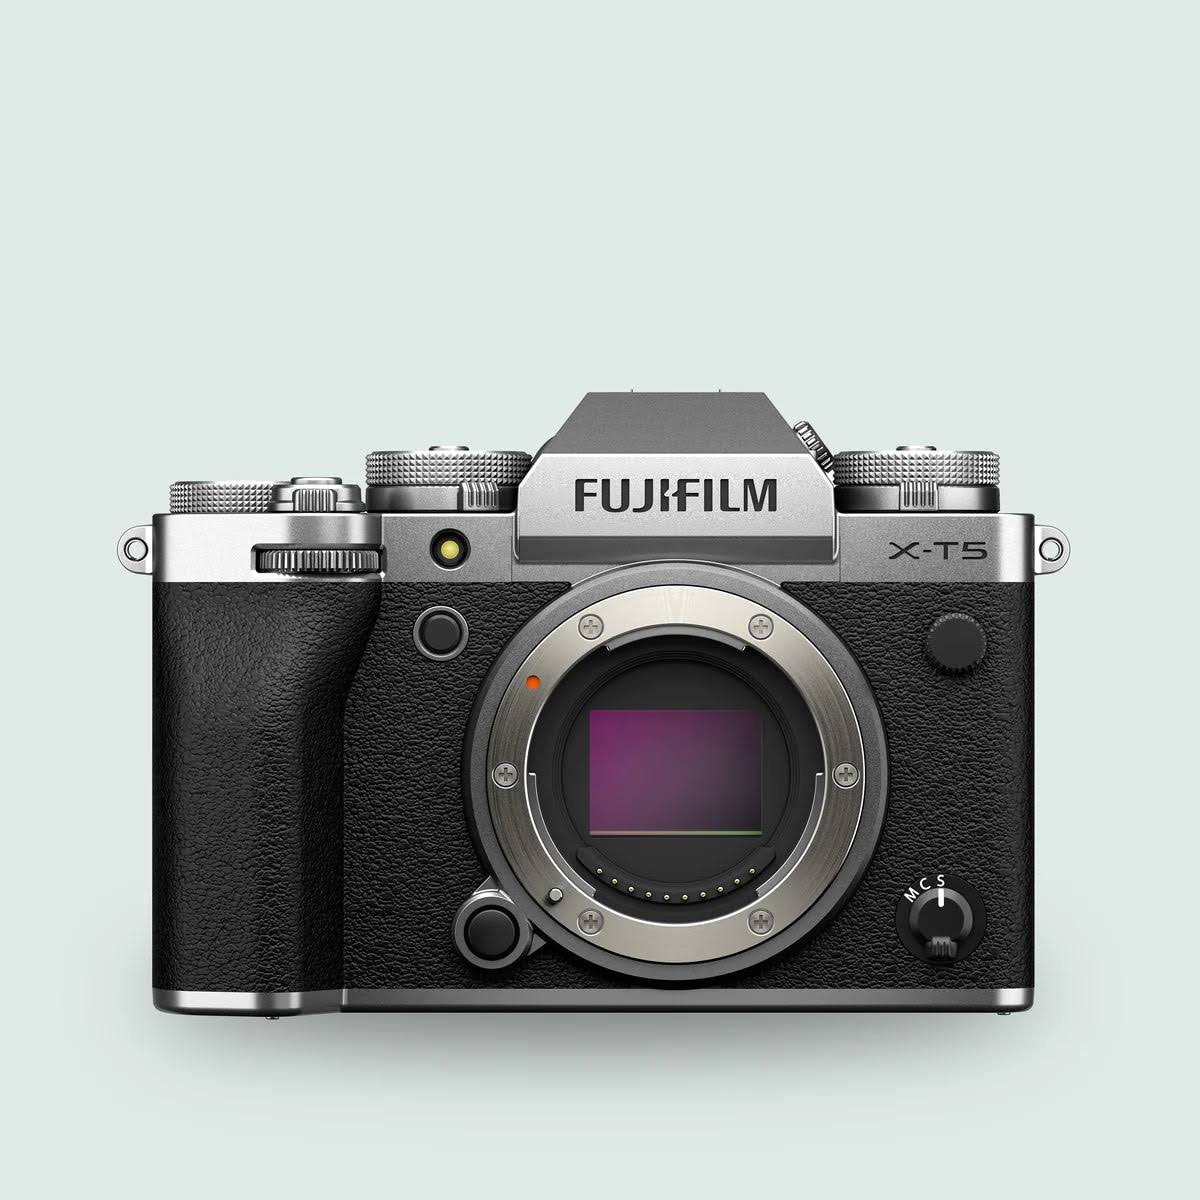 Fujifilm - X-T5 Mirrorless Camera Body - Black